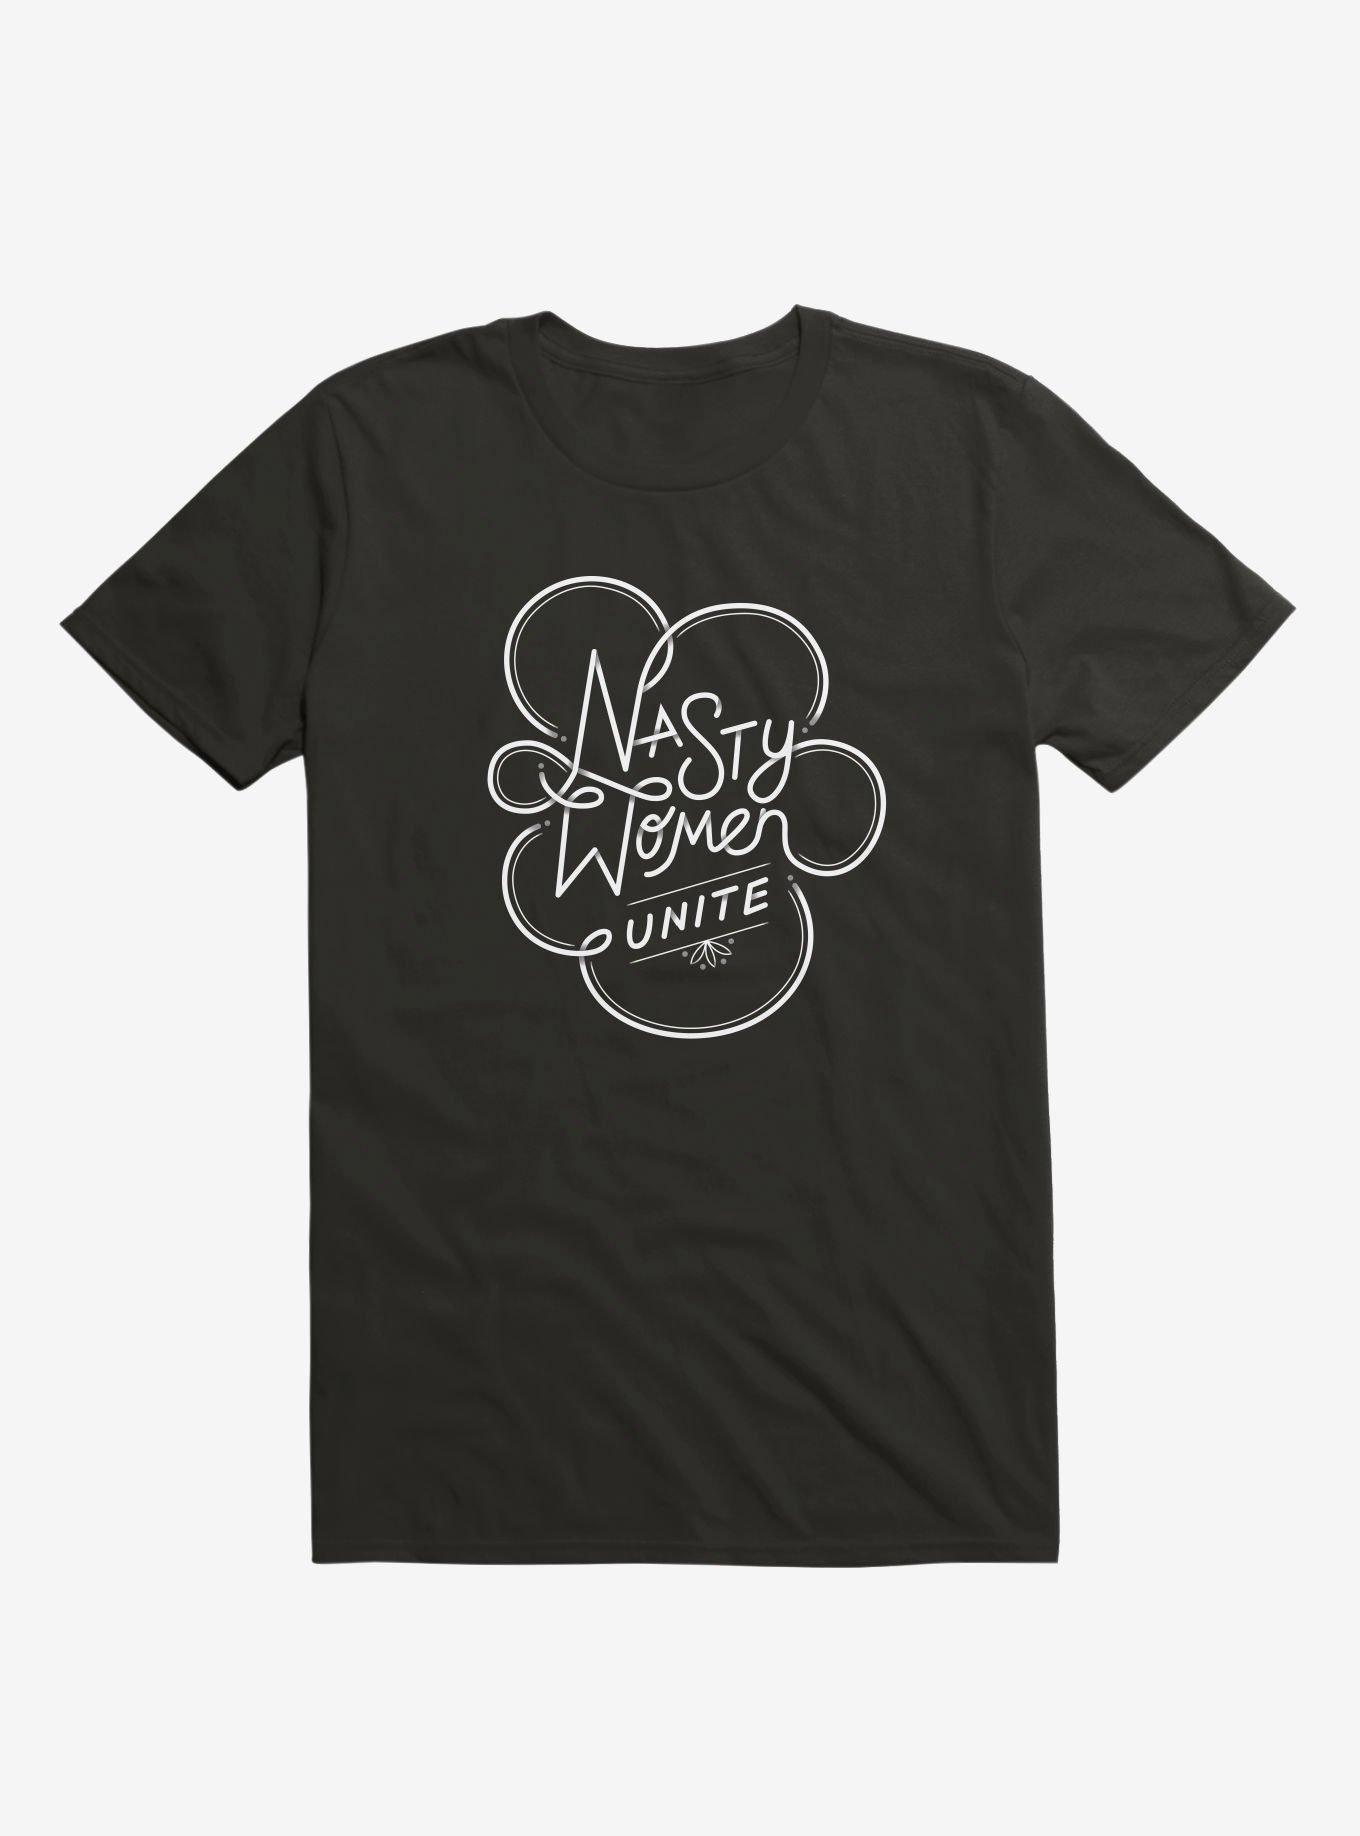 Nasty Women Unite T-Shirt, BLACK, hi-res